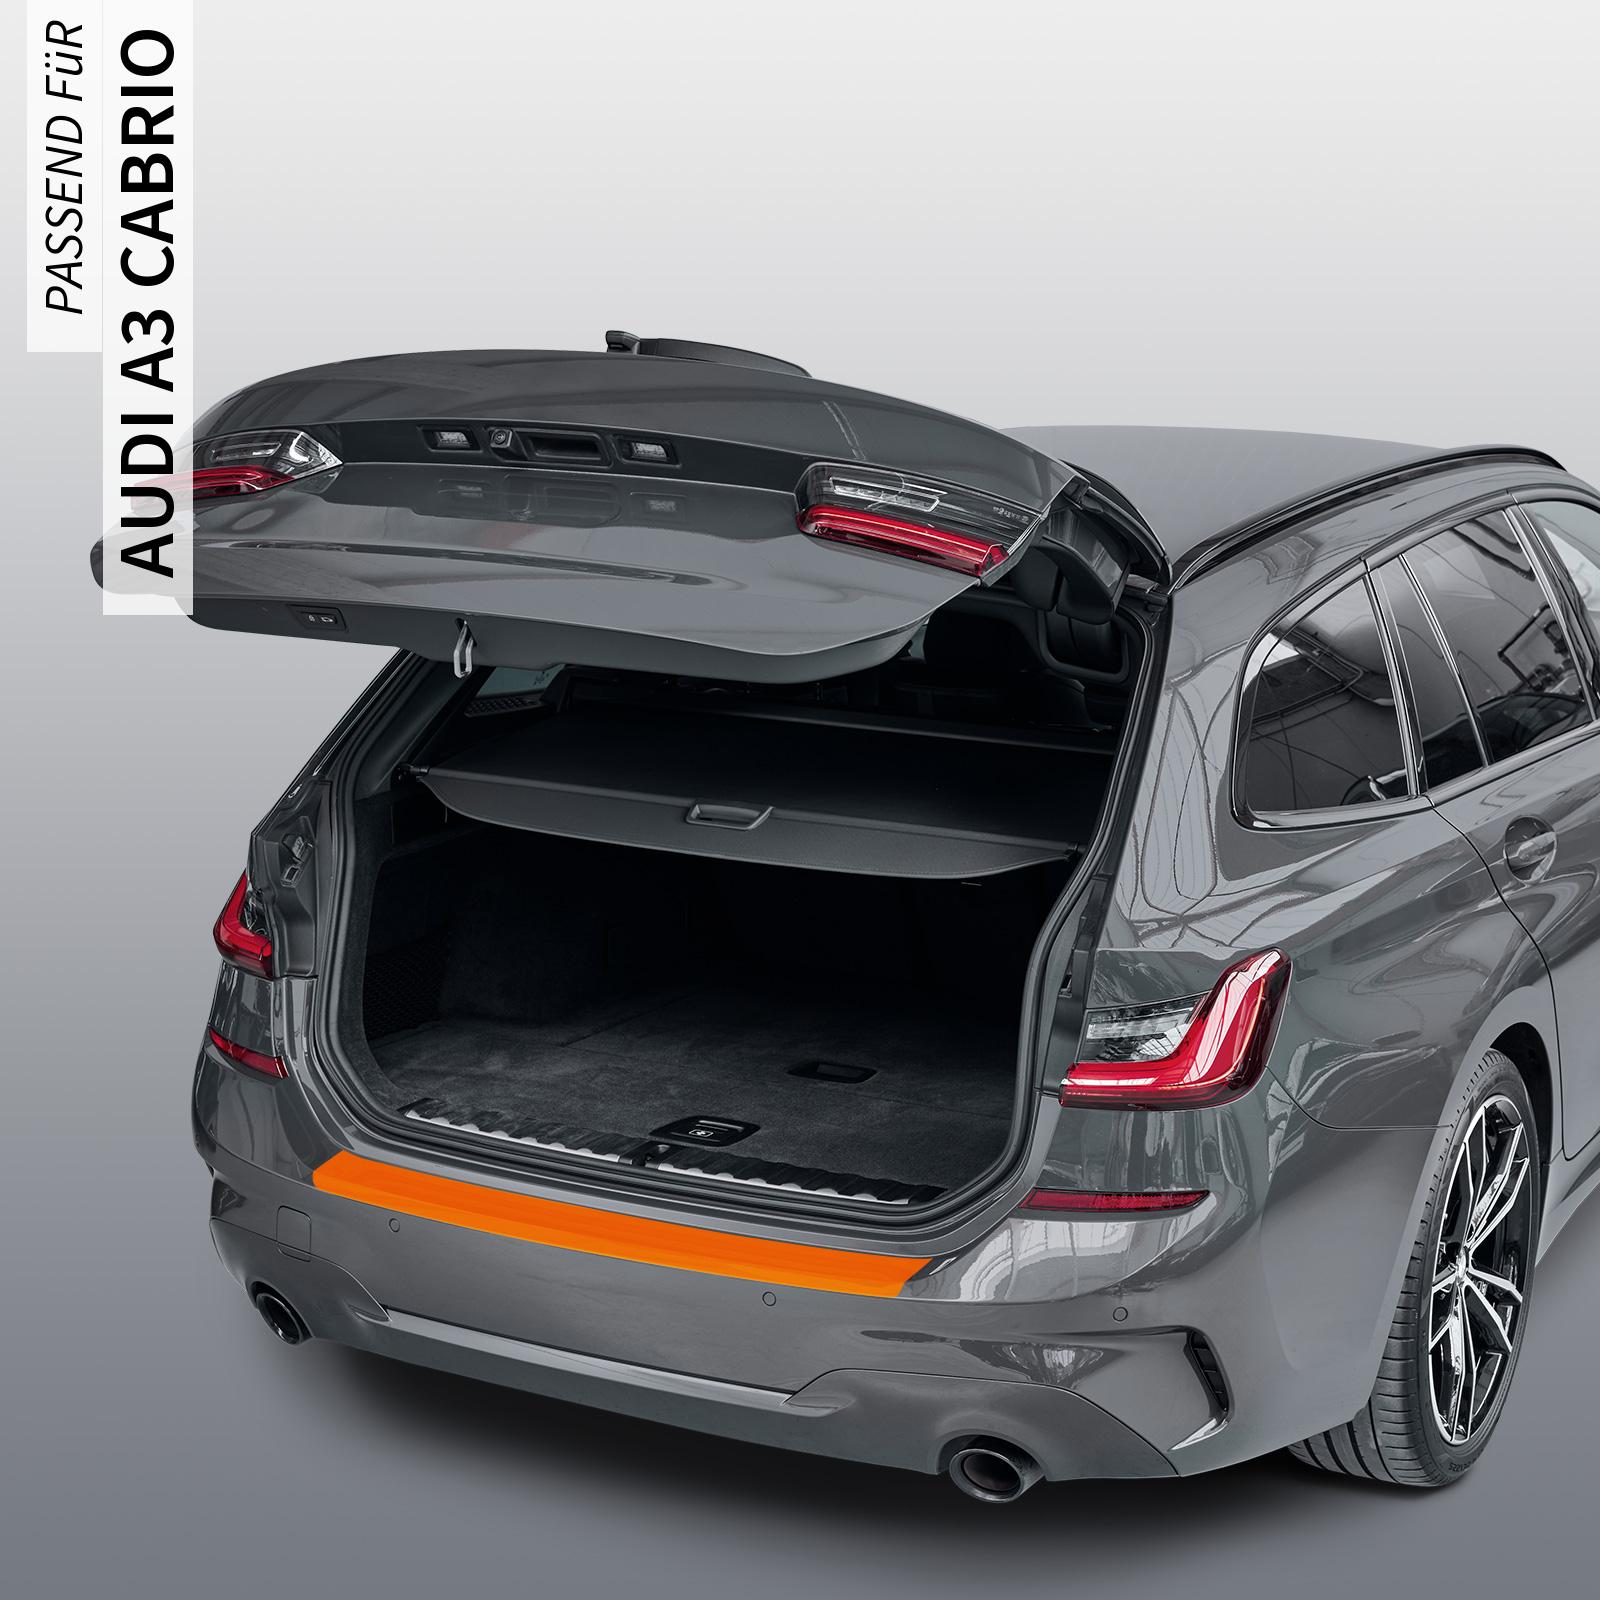 Ladekantenschutzfolie - Transparent Glatt MATT 110 µm stark  für Audi A3 Cabrio Typ 8V, BJ 04/2014-2020